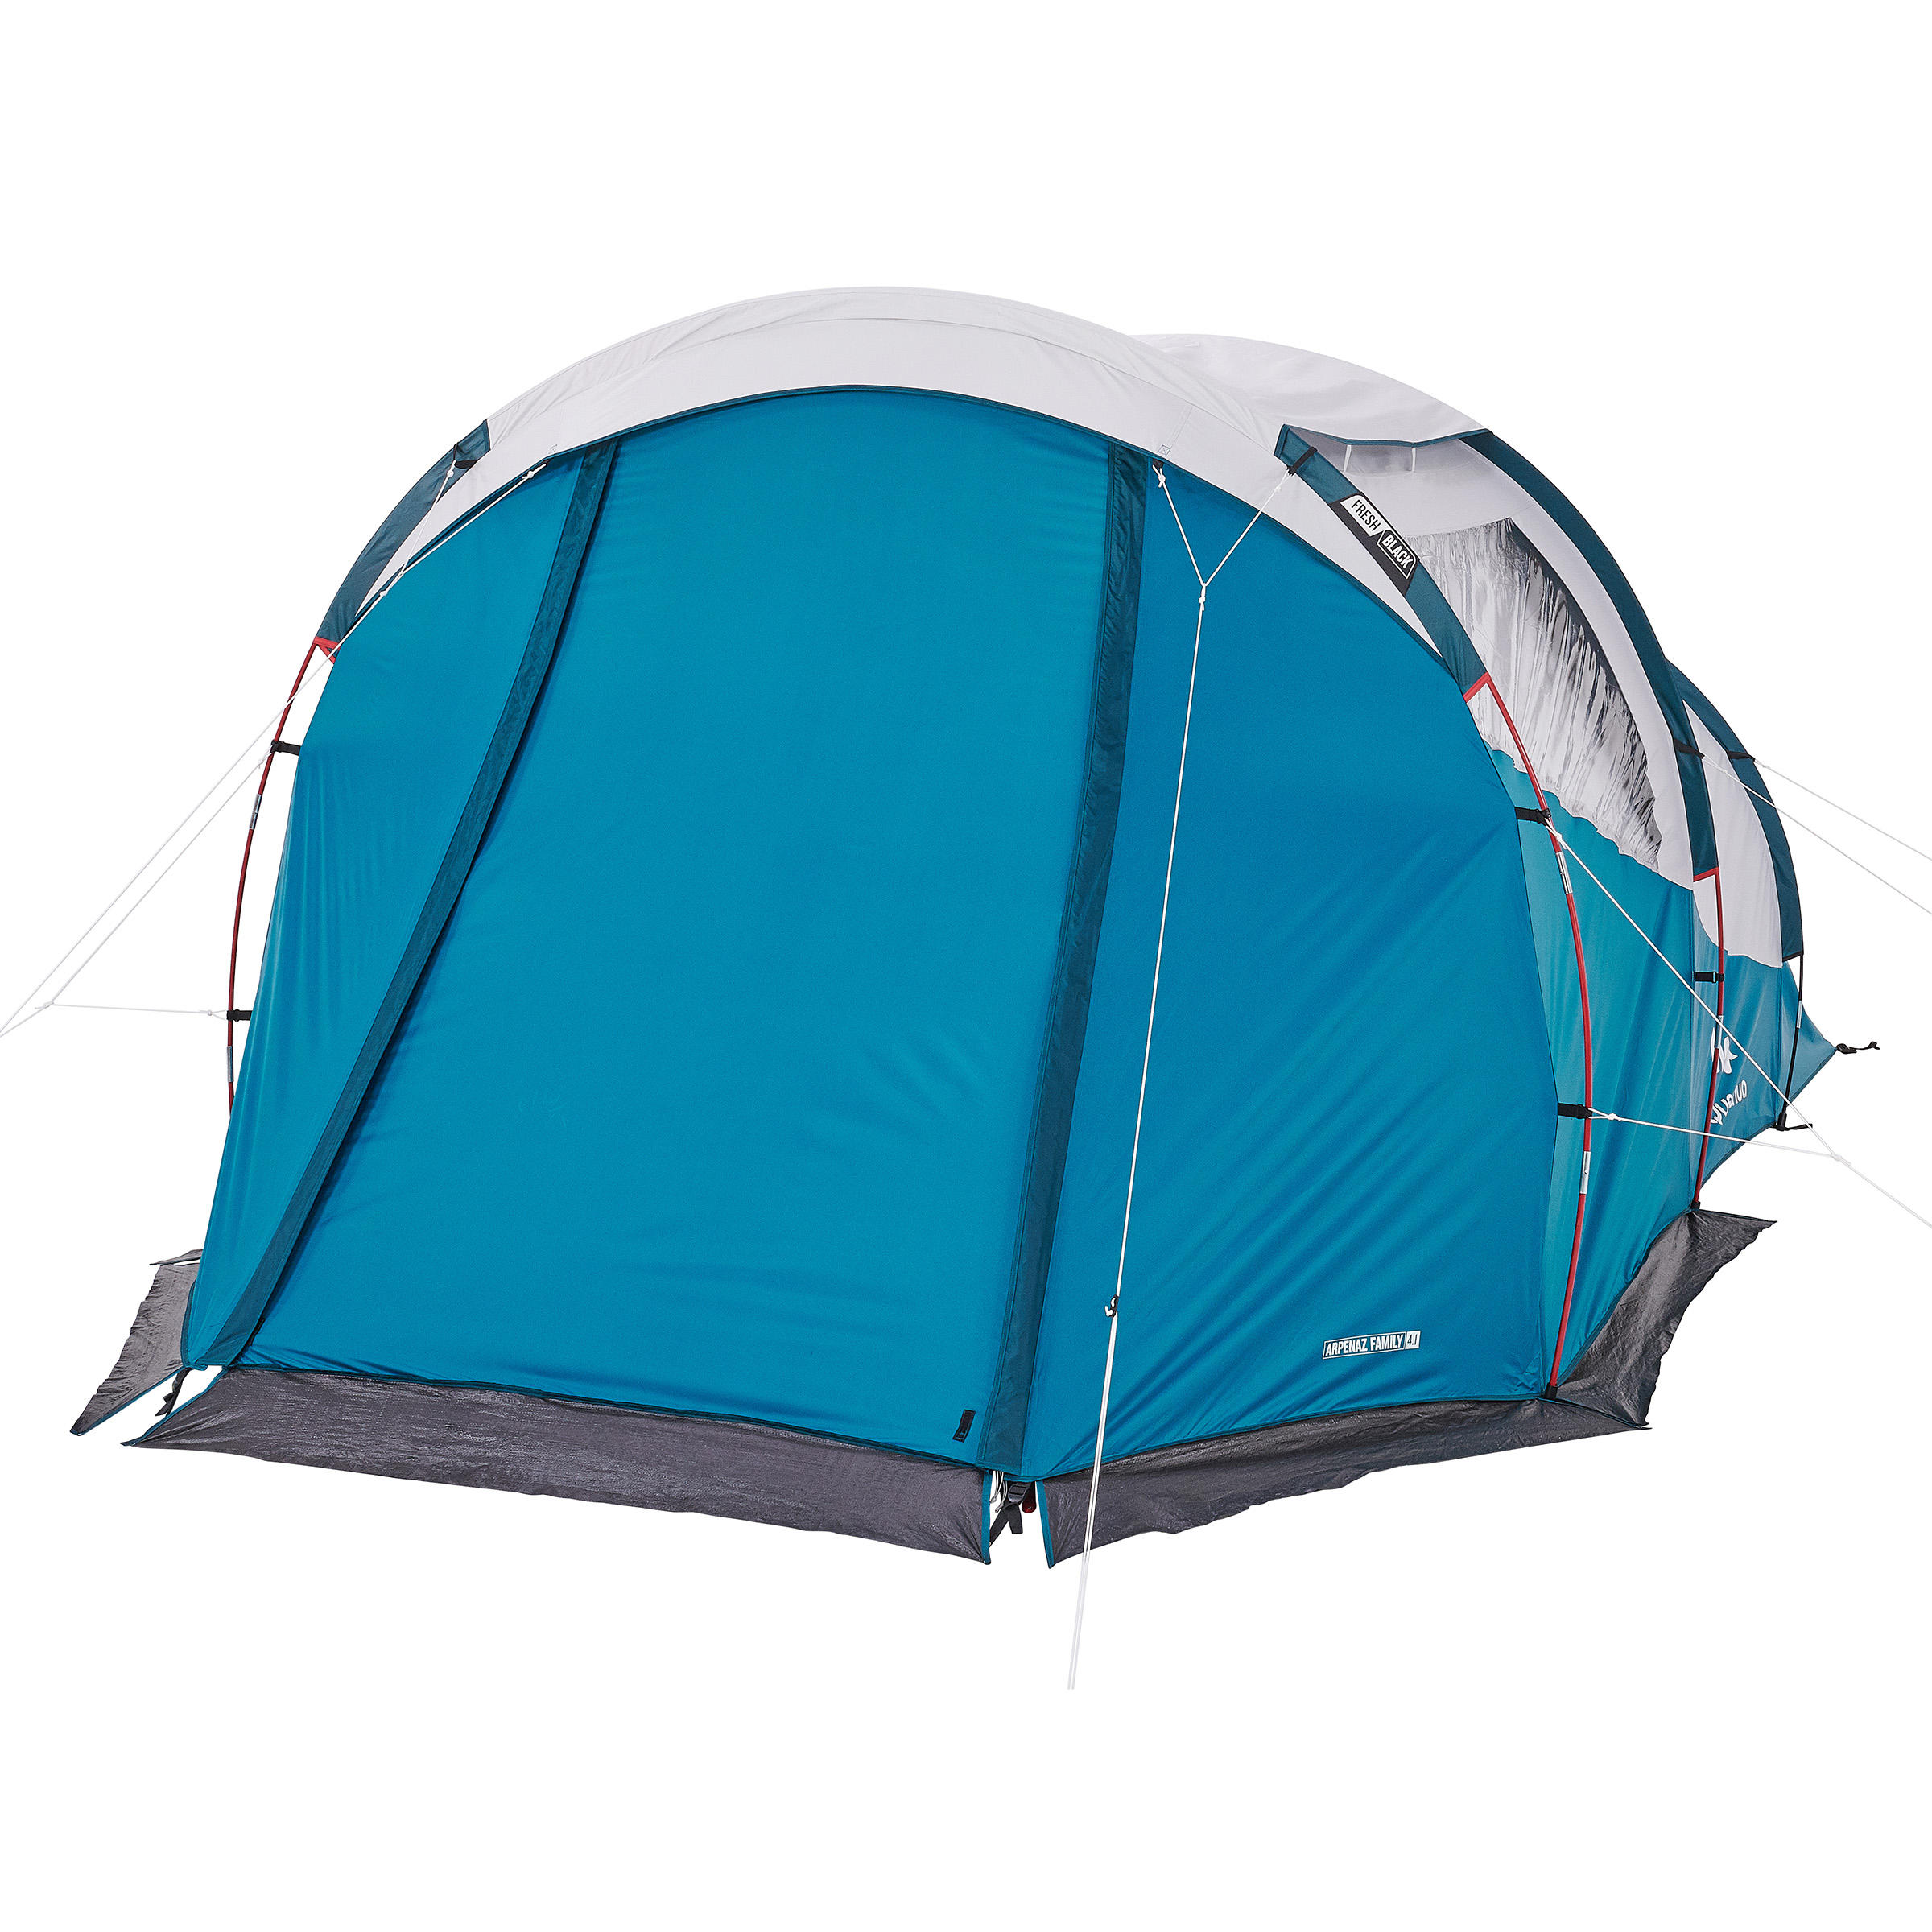 decathlon 4.1 tent